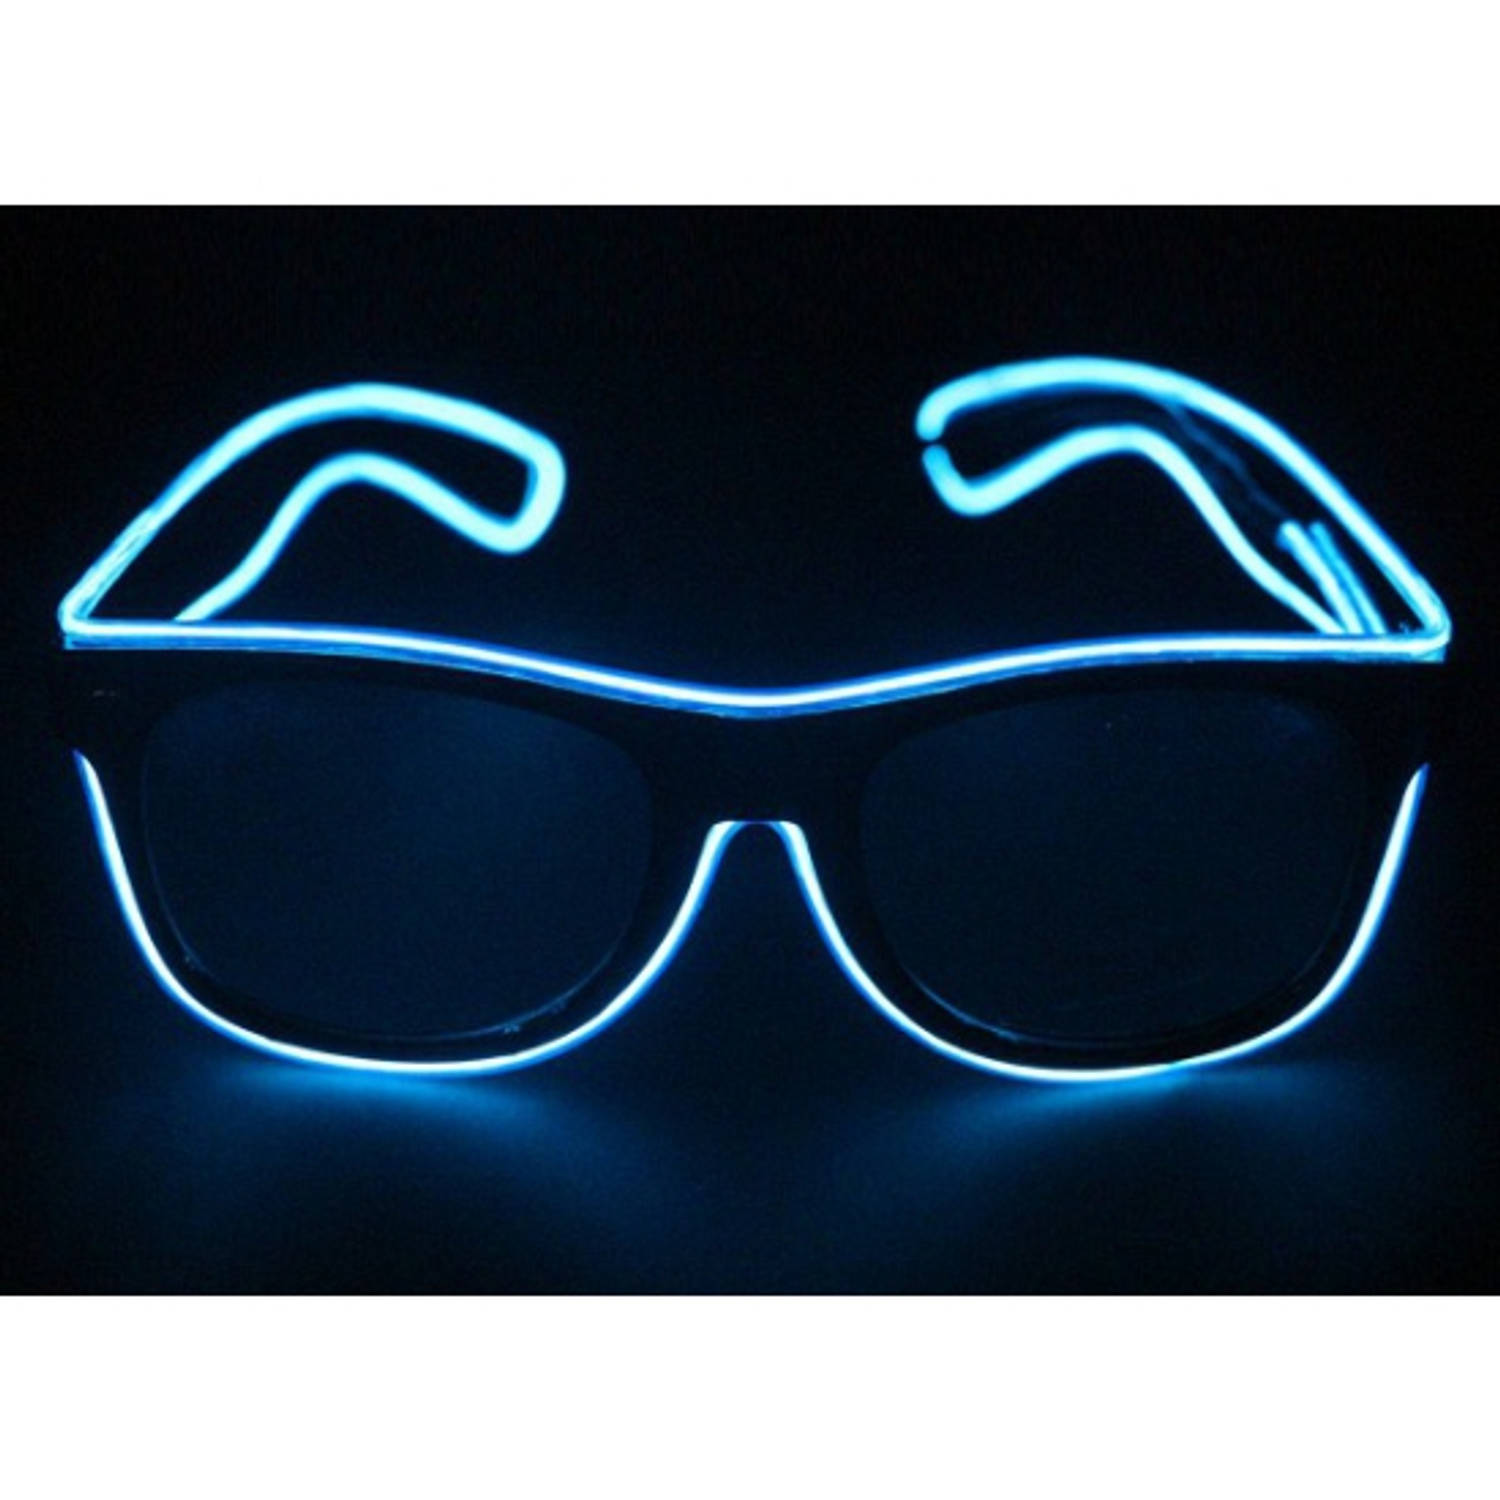 Feest bril LED verlichting - Verkleedbrillen | Blokker